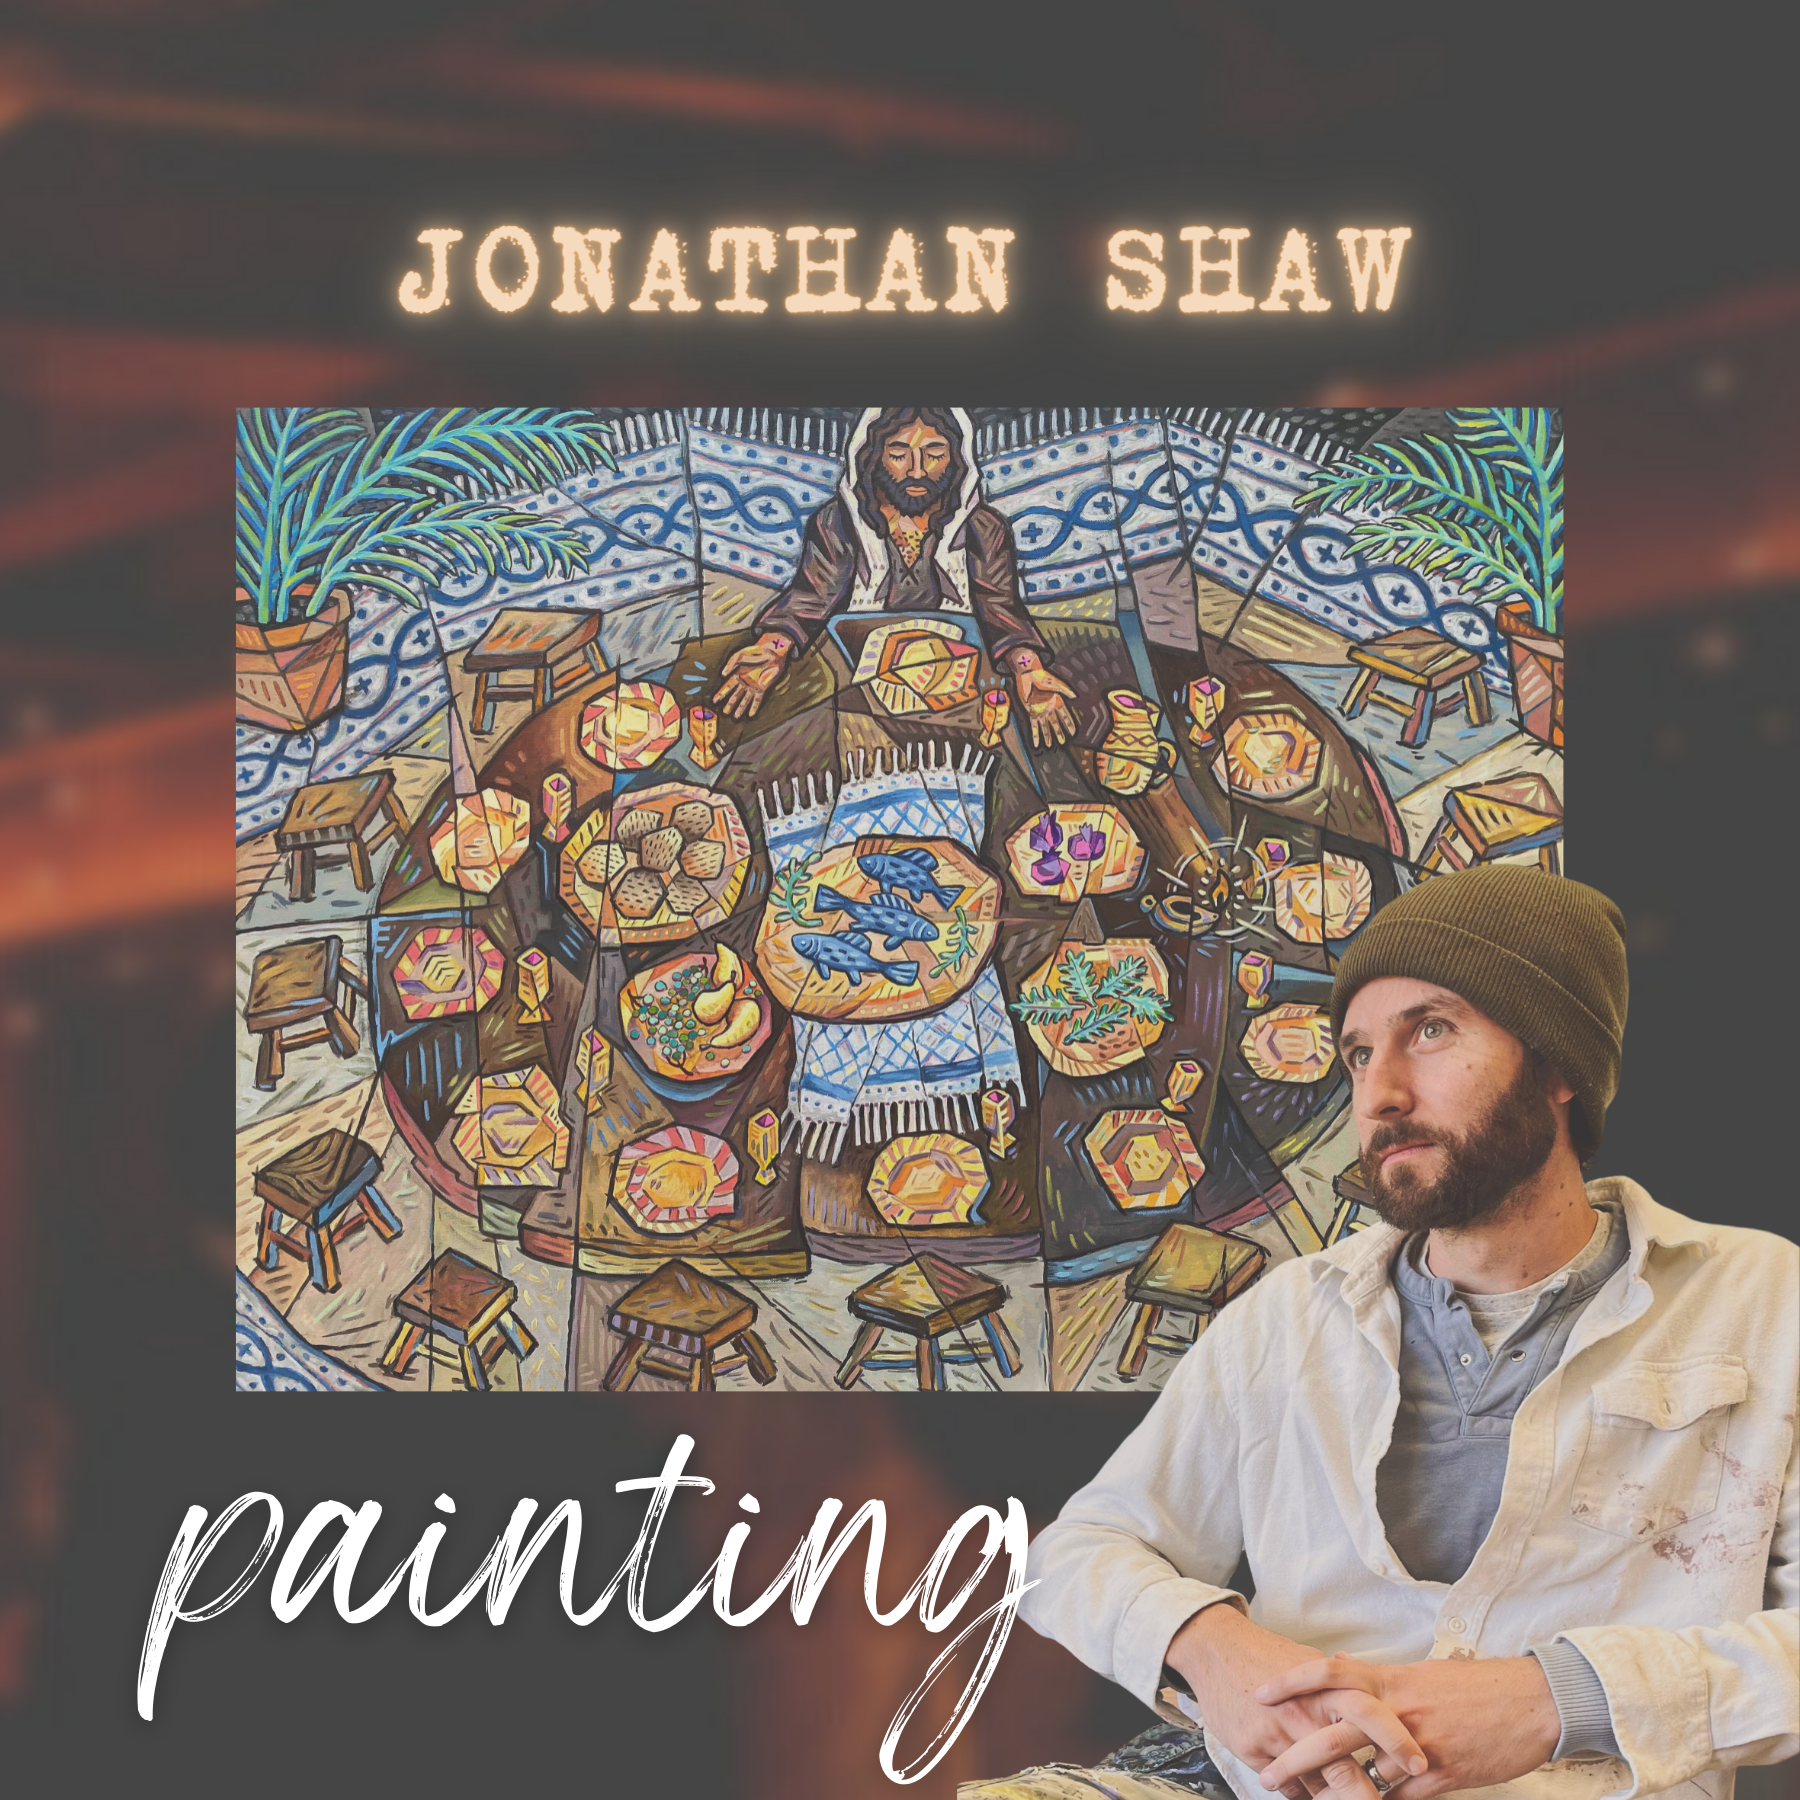 Painter: Jonathan Shaw